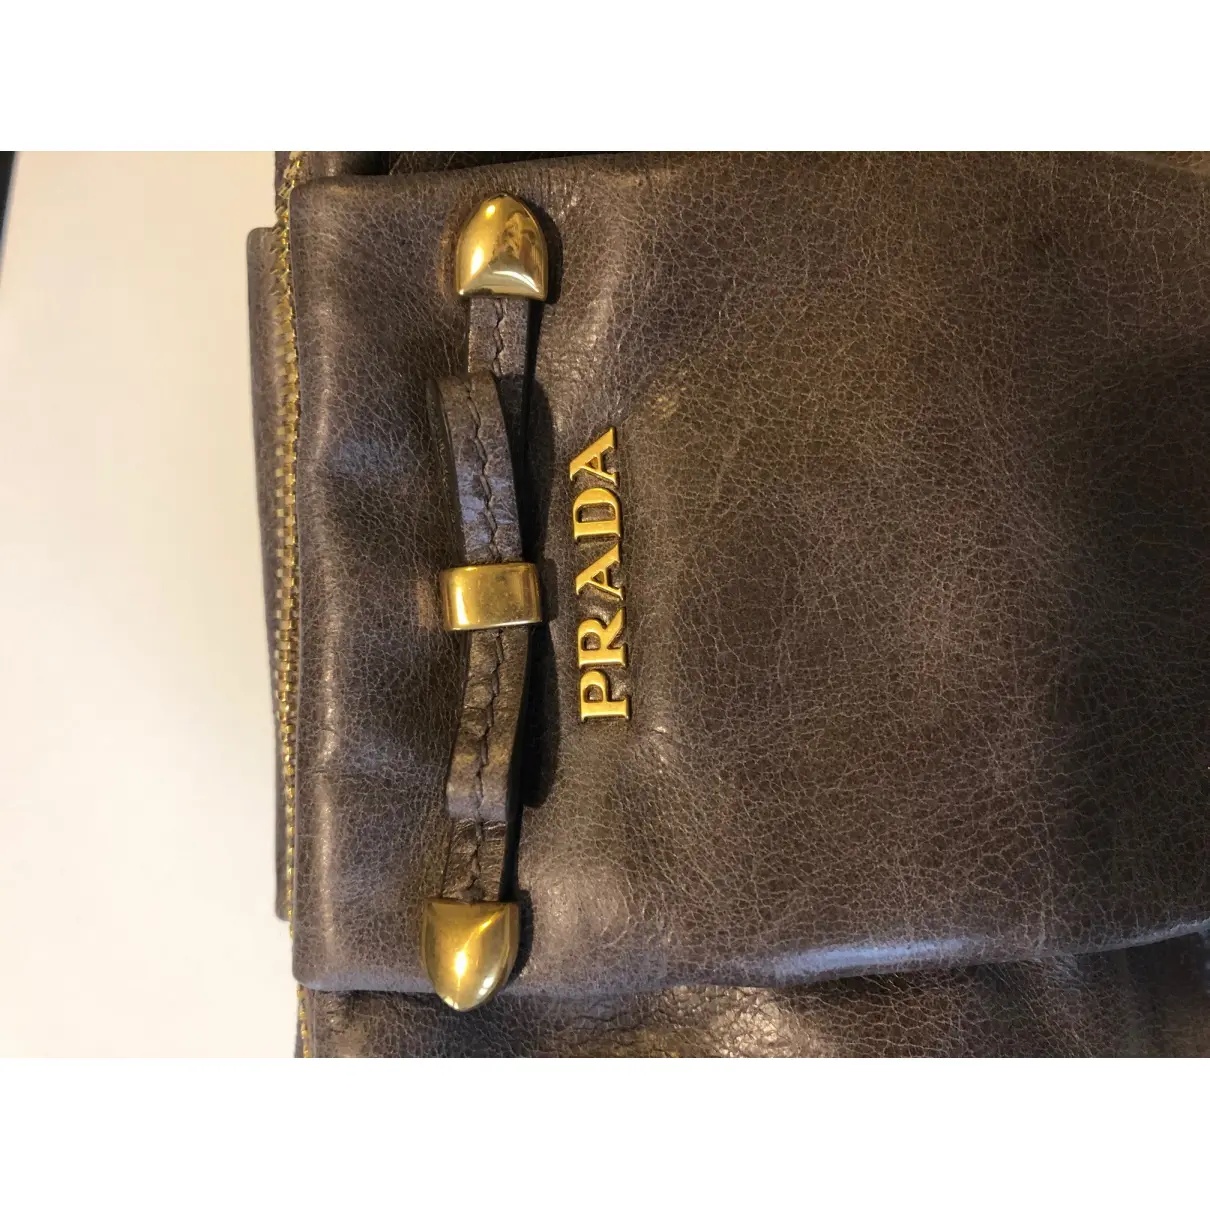 Luxury Prada Clutch bags Women